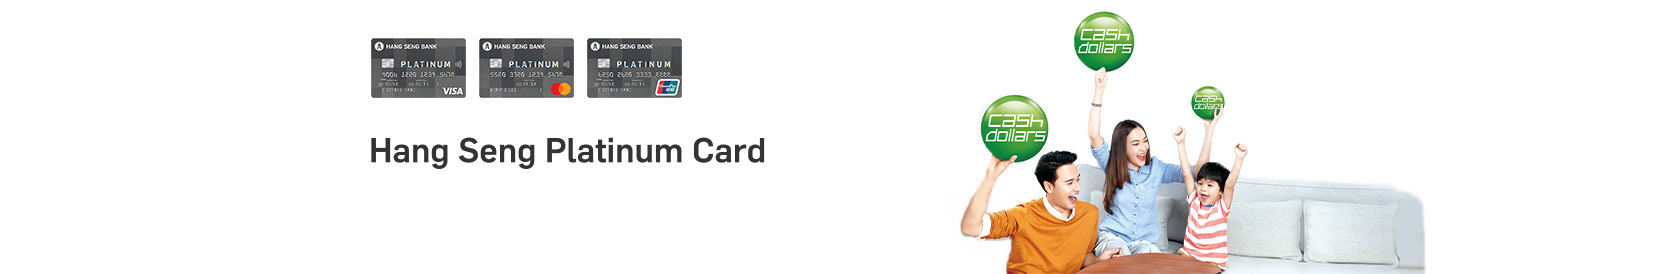 Successfully apply for Hang Seng Platinum card to enjoy $700 Cash Dollars